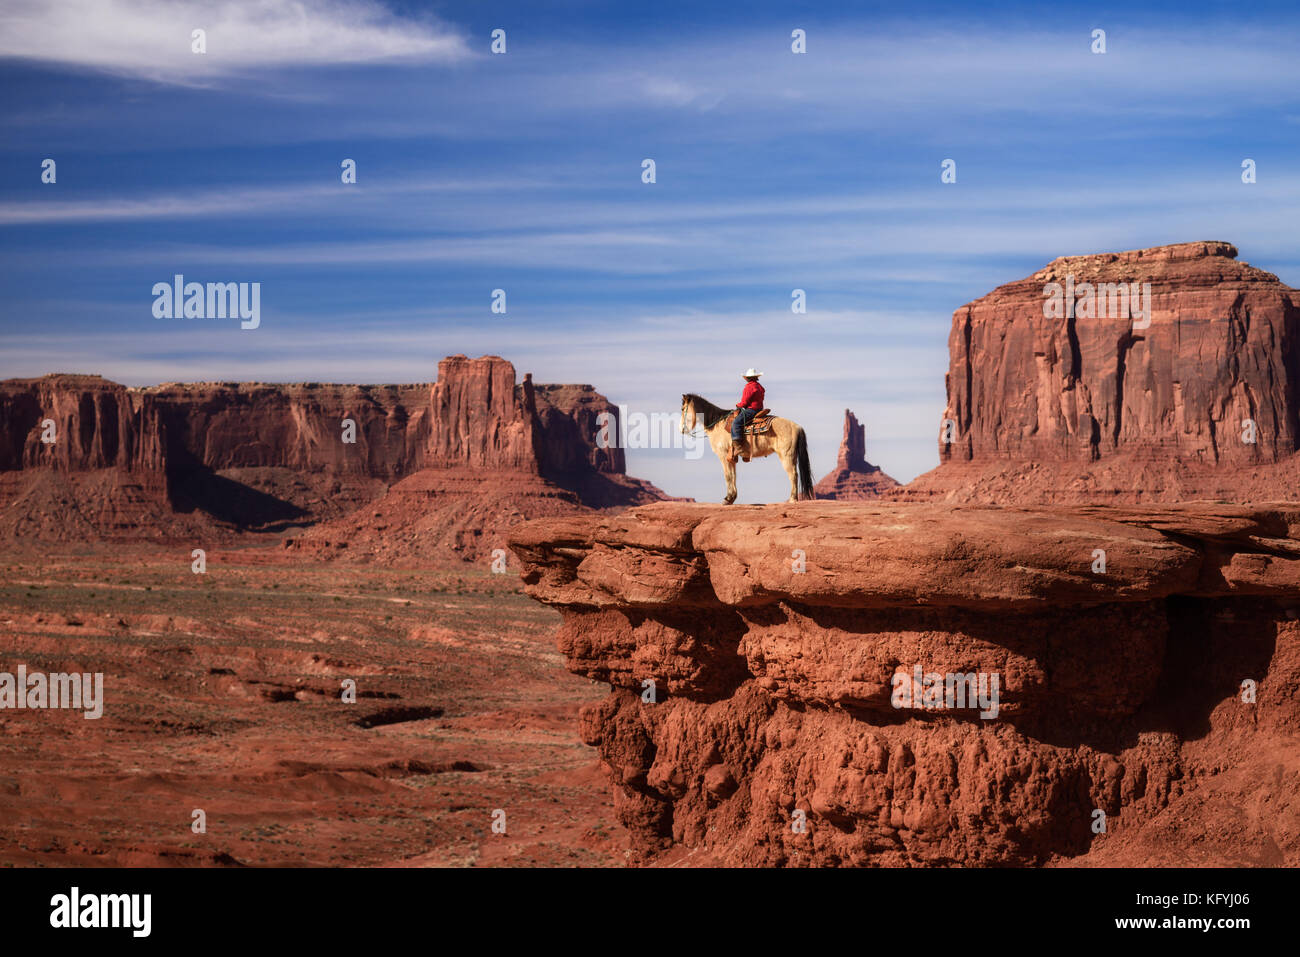 beautiful scene of Native American sitting on a horse in Monument Valley, Utah - Arizona State, America. Stock Photo